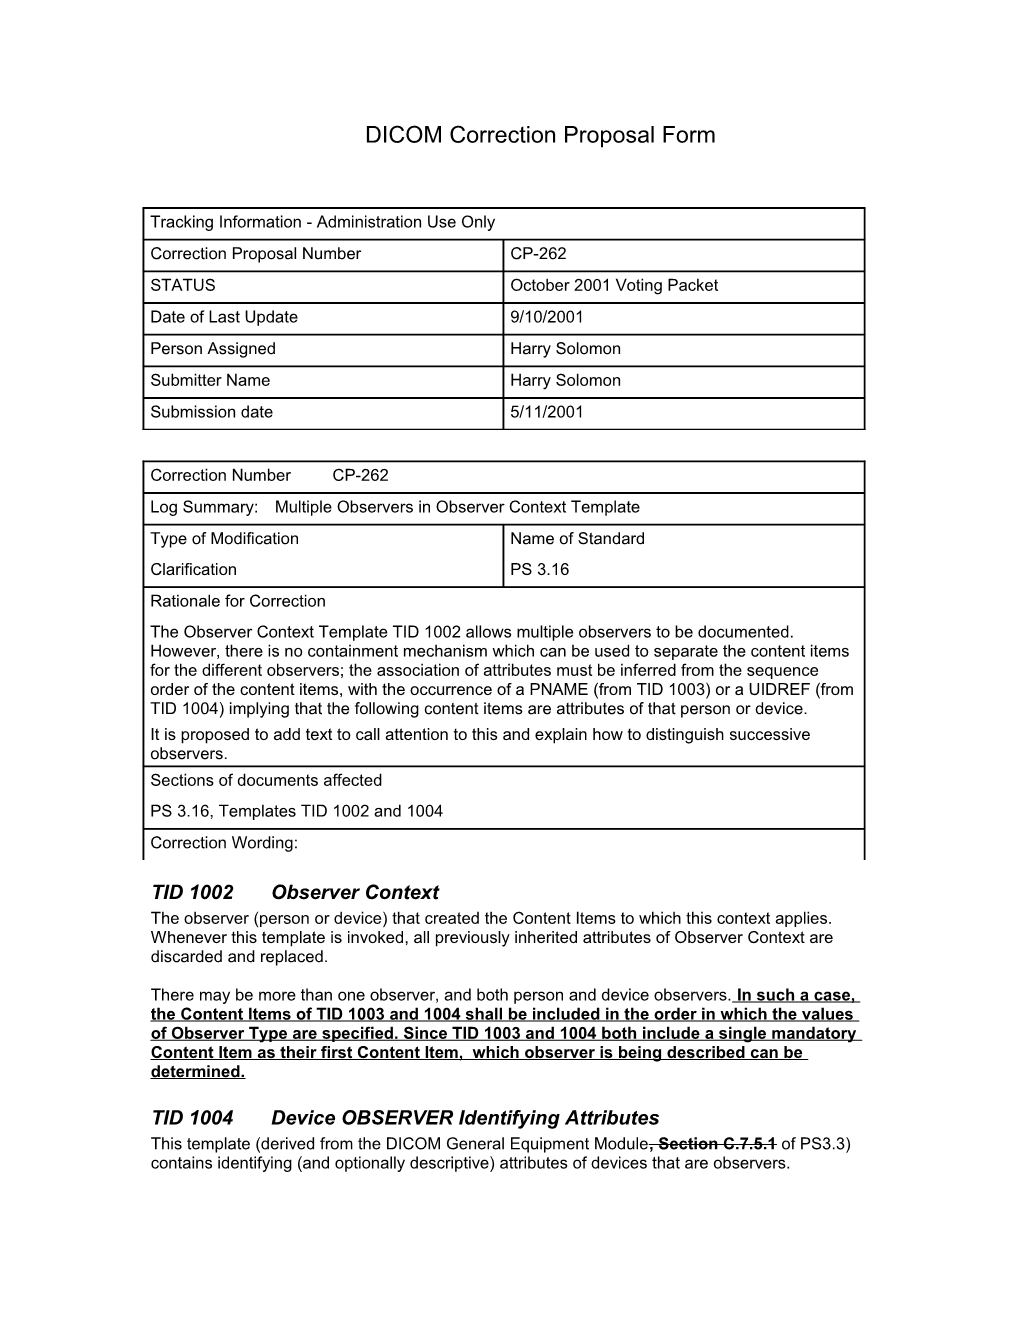 DICOM Correction Proposal Form